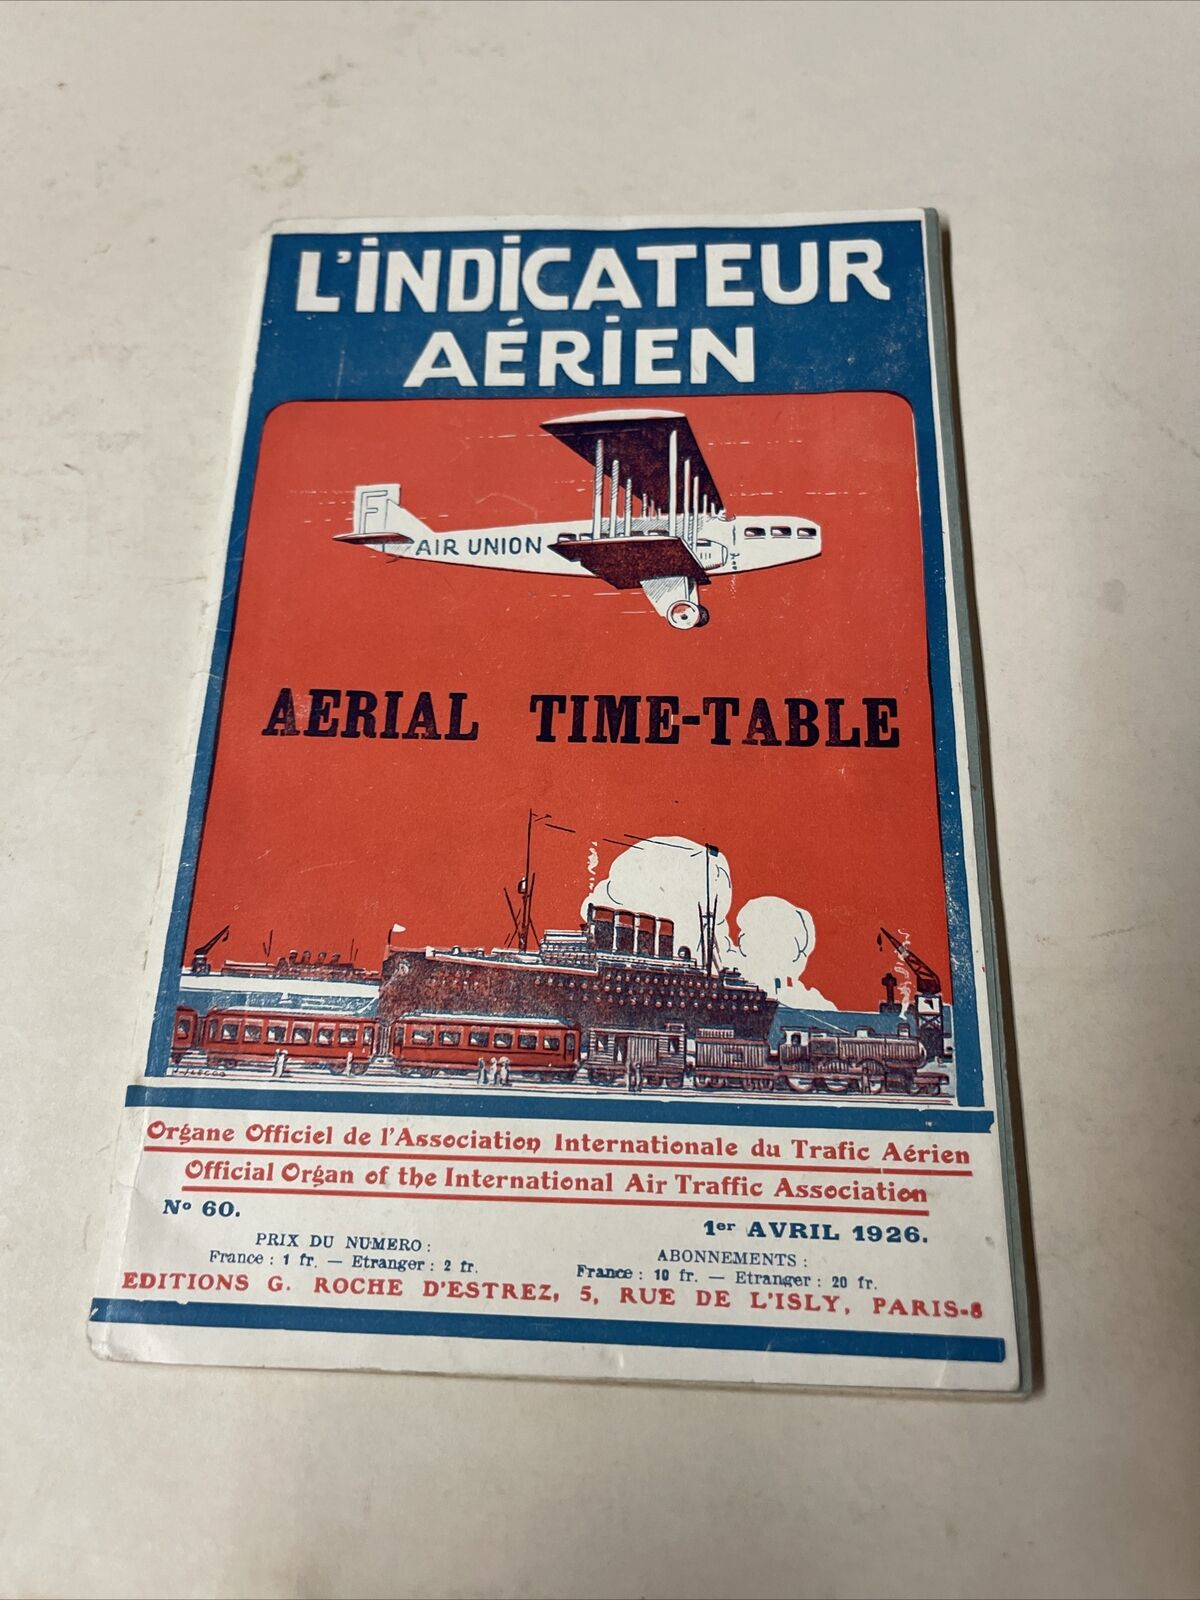 KLM Sabena Imperial Air Union 1926 AIRLINE TIMETABLE SCHEDULE Brochure flight